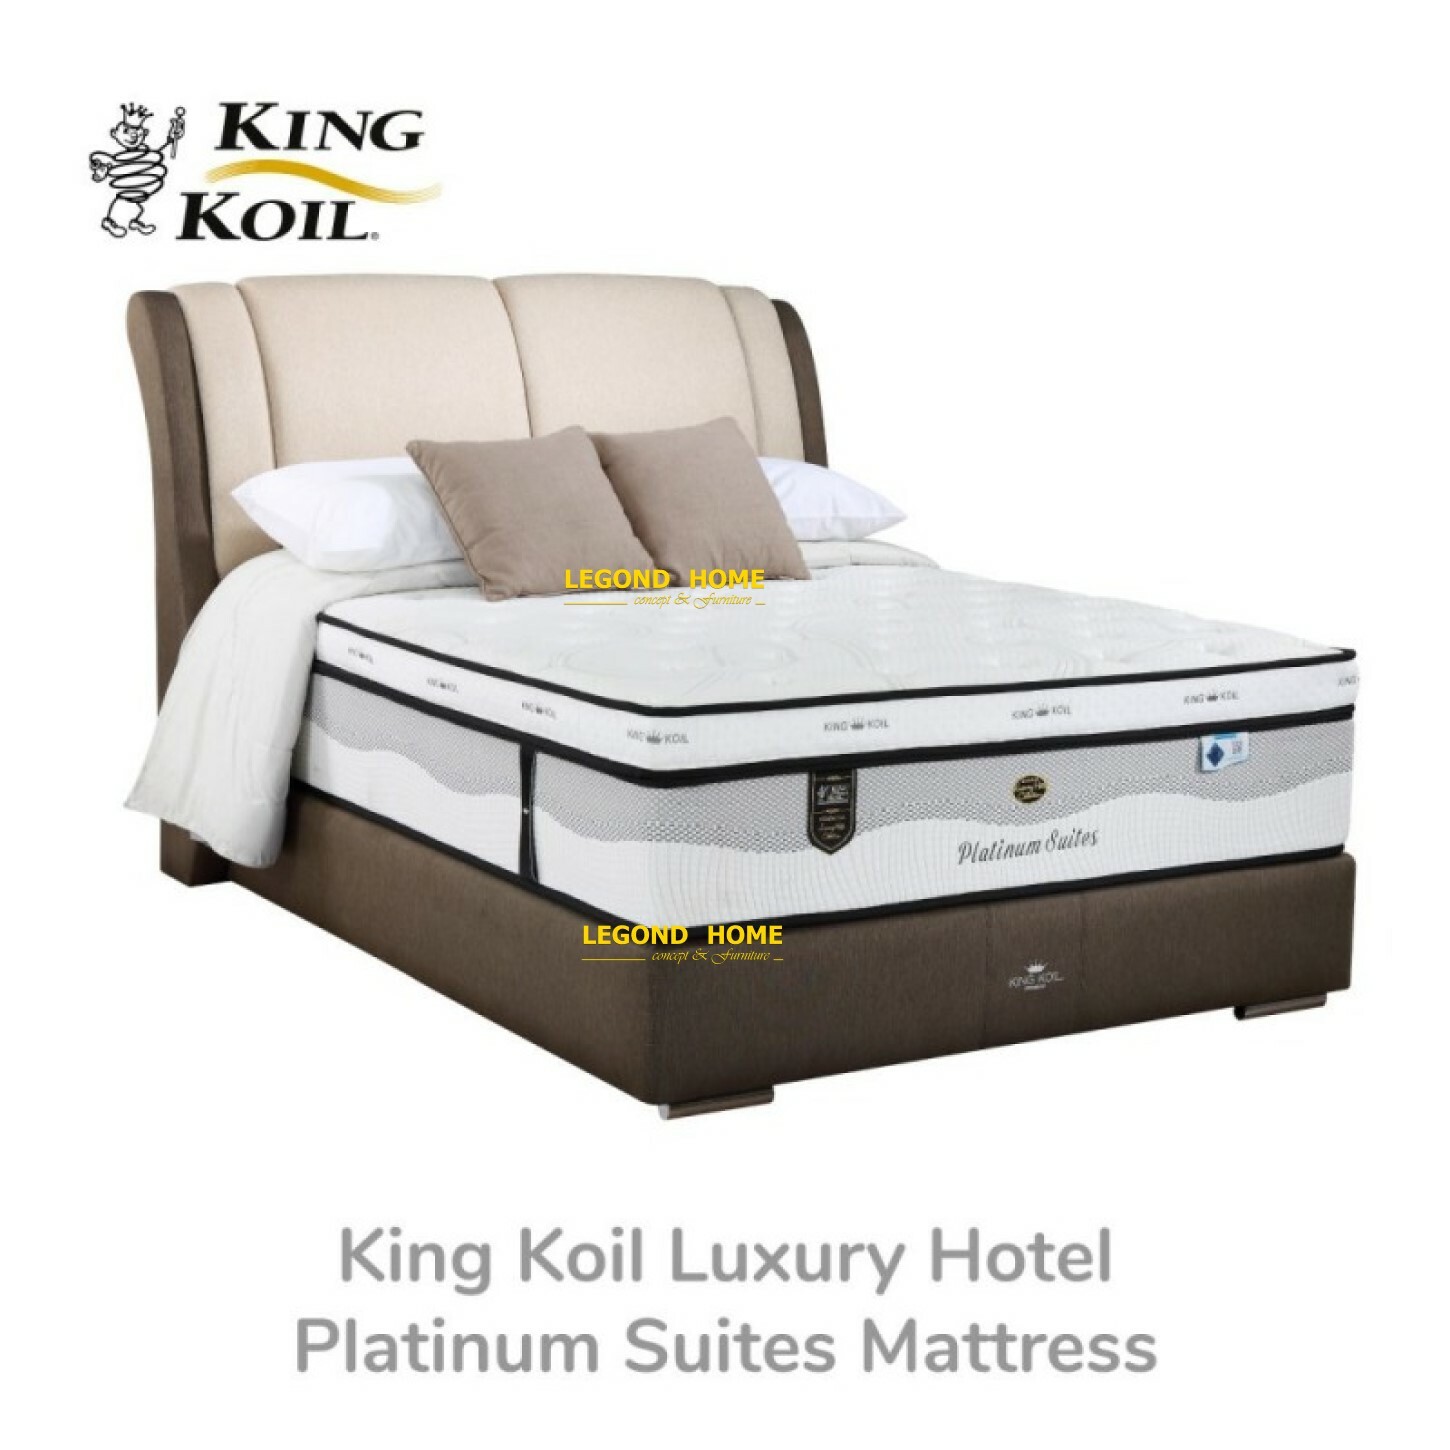 King-Koil-Luxury-Hotel-Platinum-Suites-Mattress.jpg